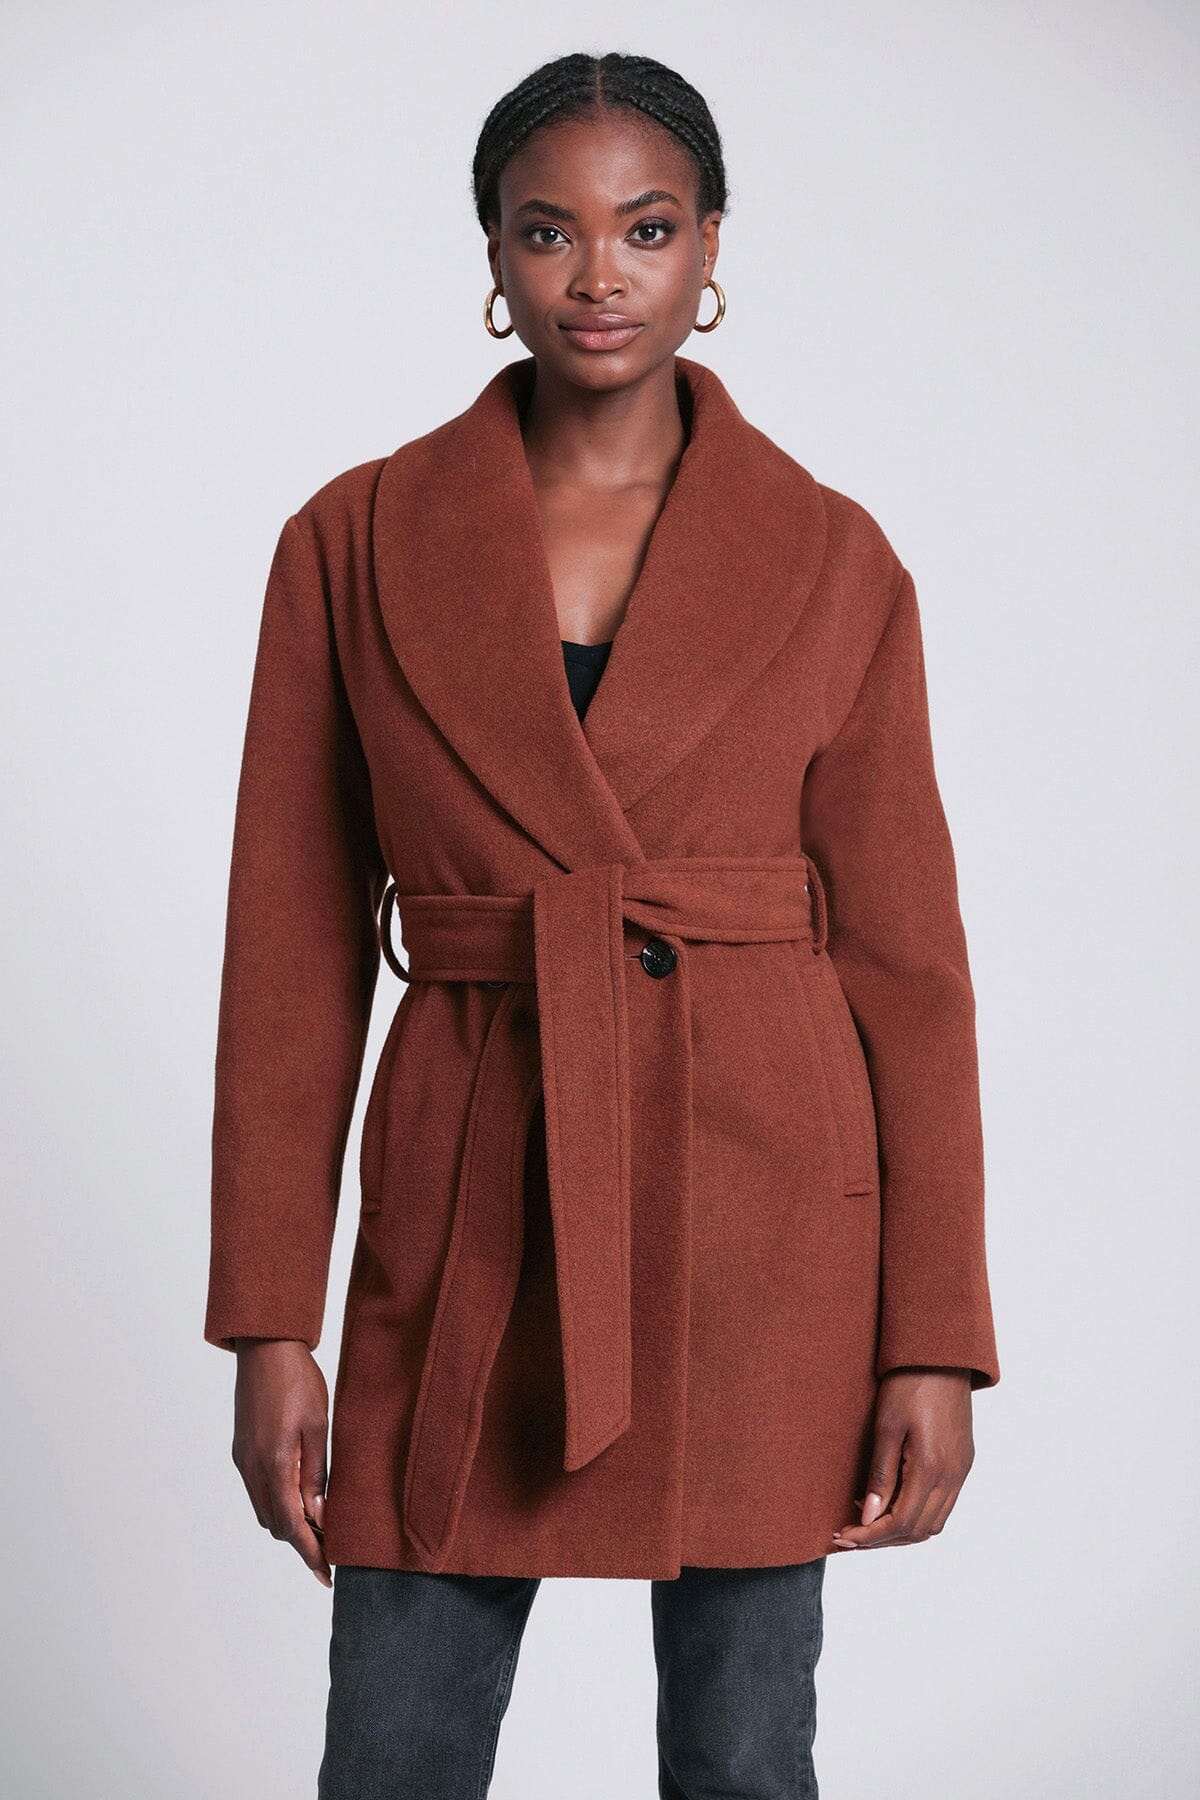 Cinnamon brown wool blend belted shawl collar peacoat coat - figure flattering fall date night coats peacoats for women